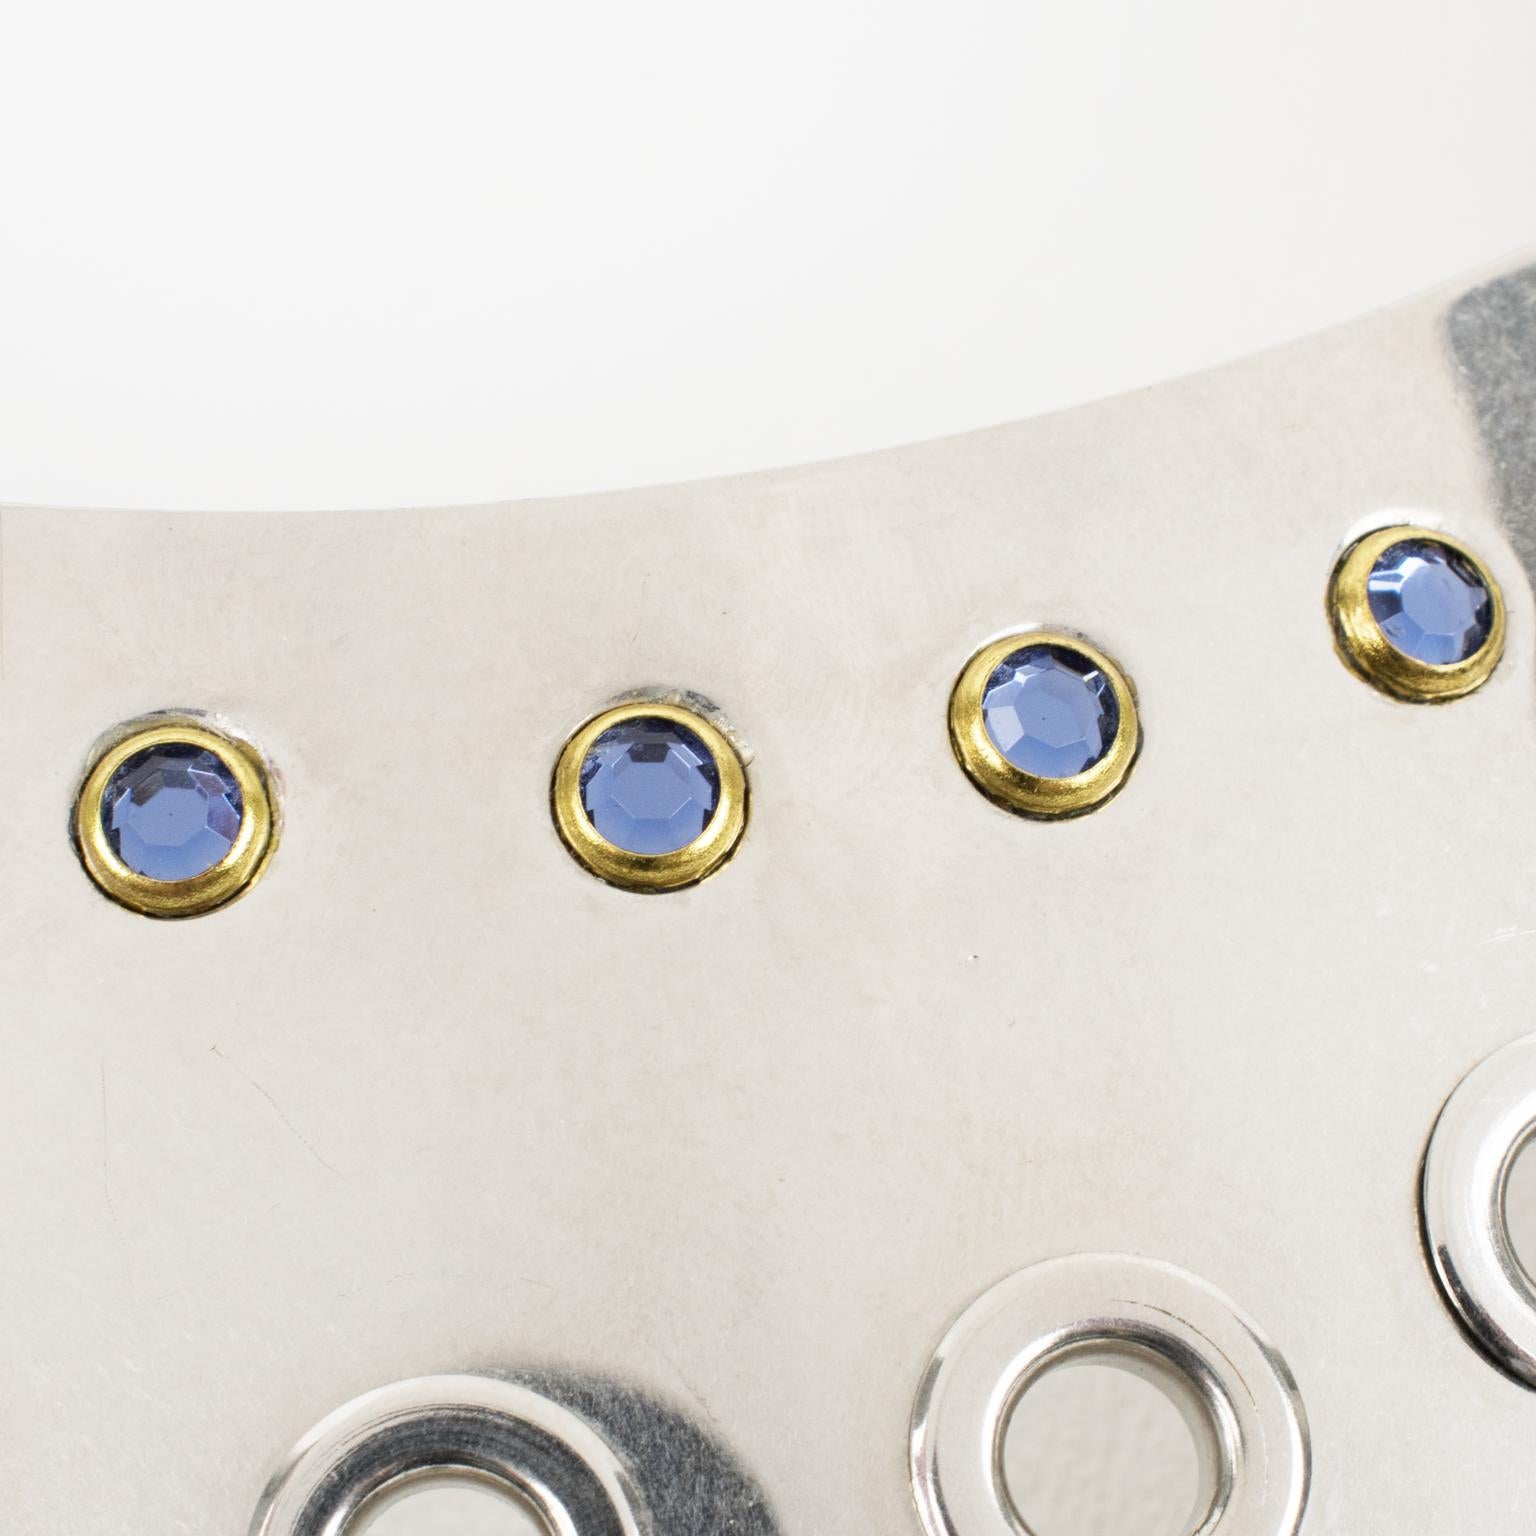 Sonia Rykiel Paris Futuristic Chrome Bib Necklace with Blue Crystals For Sale 5